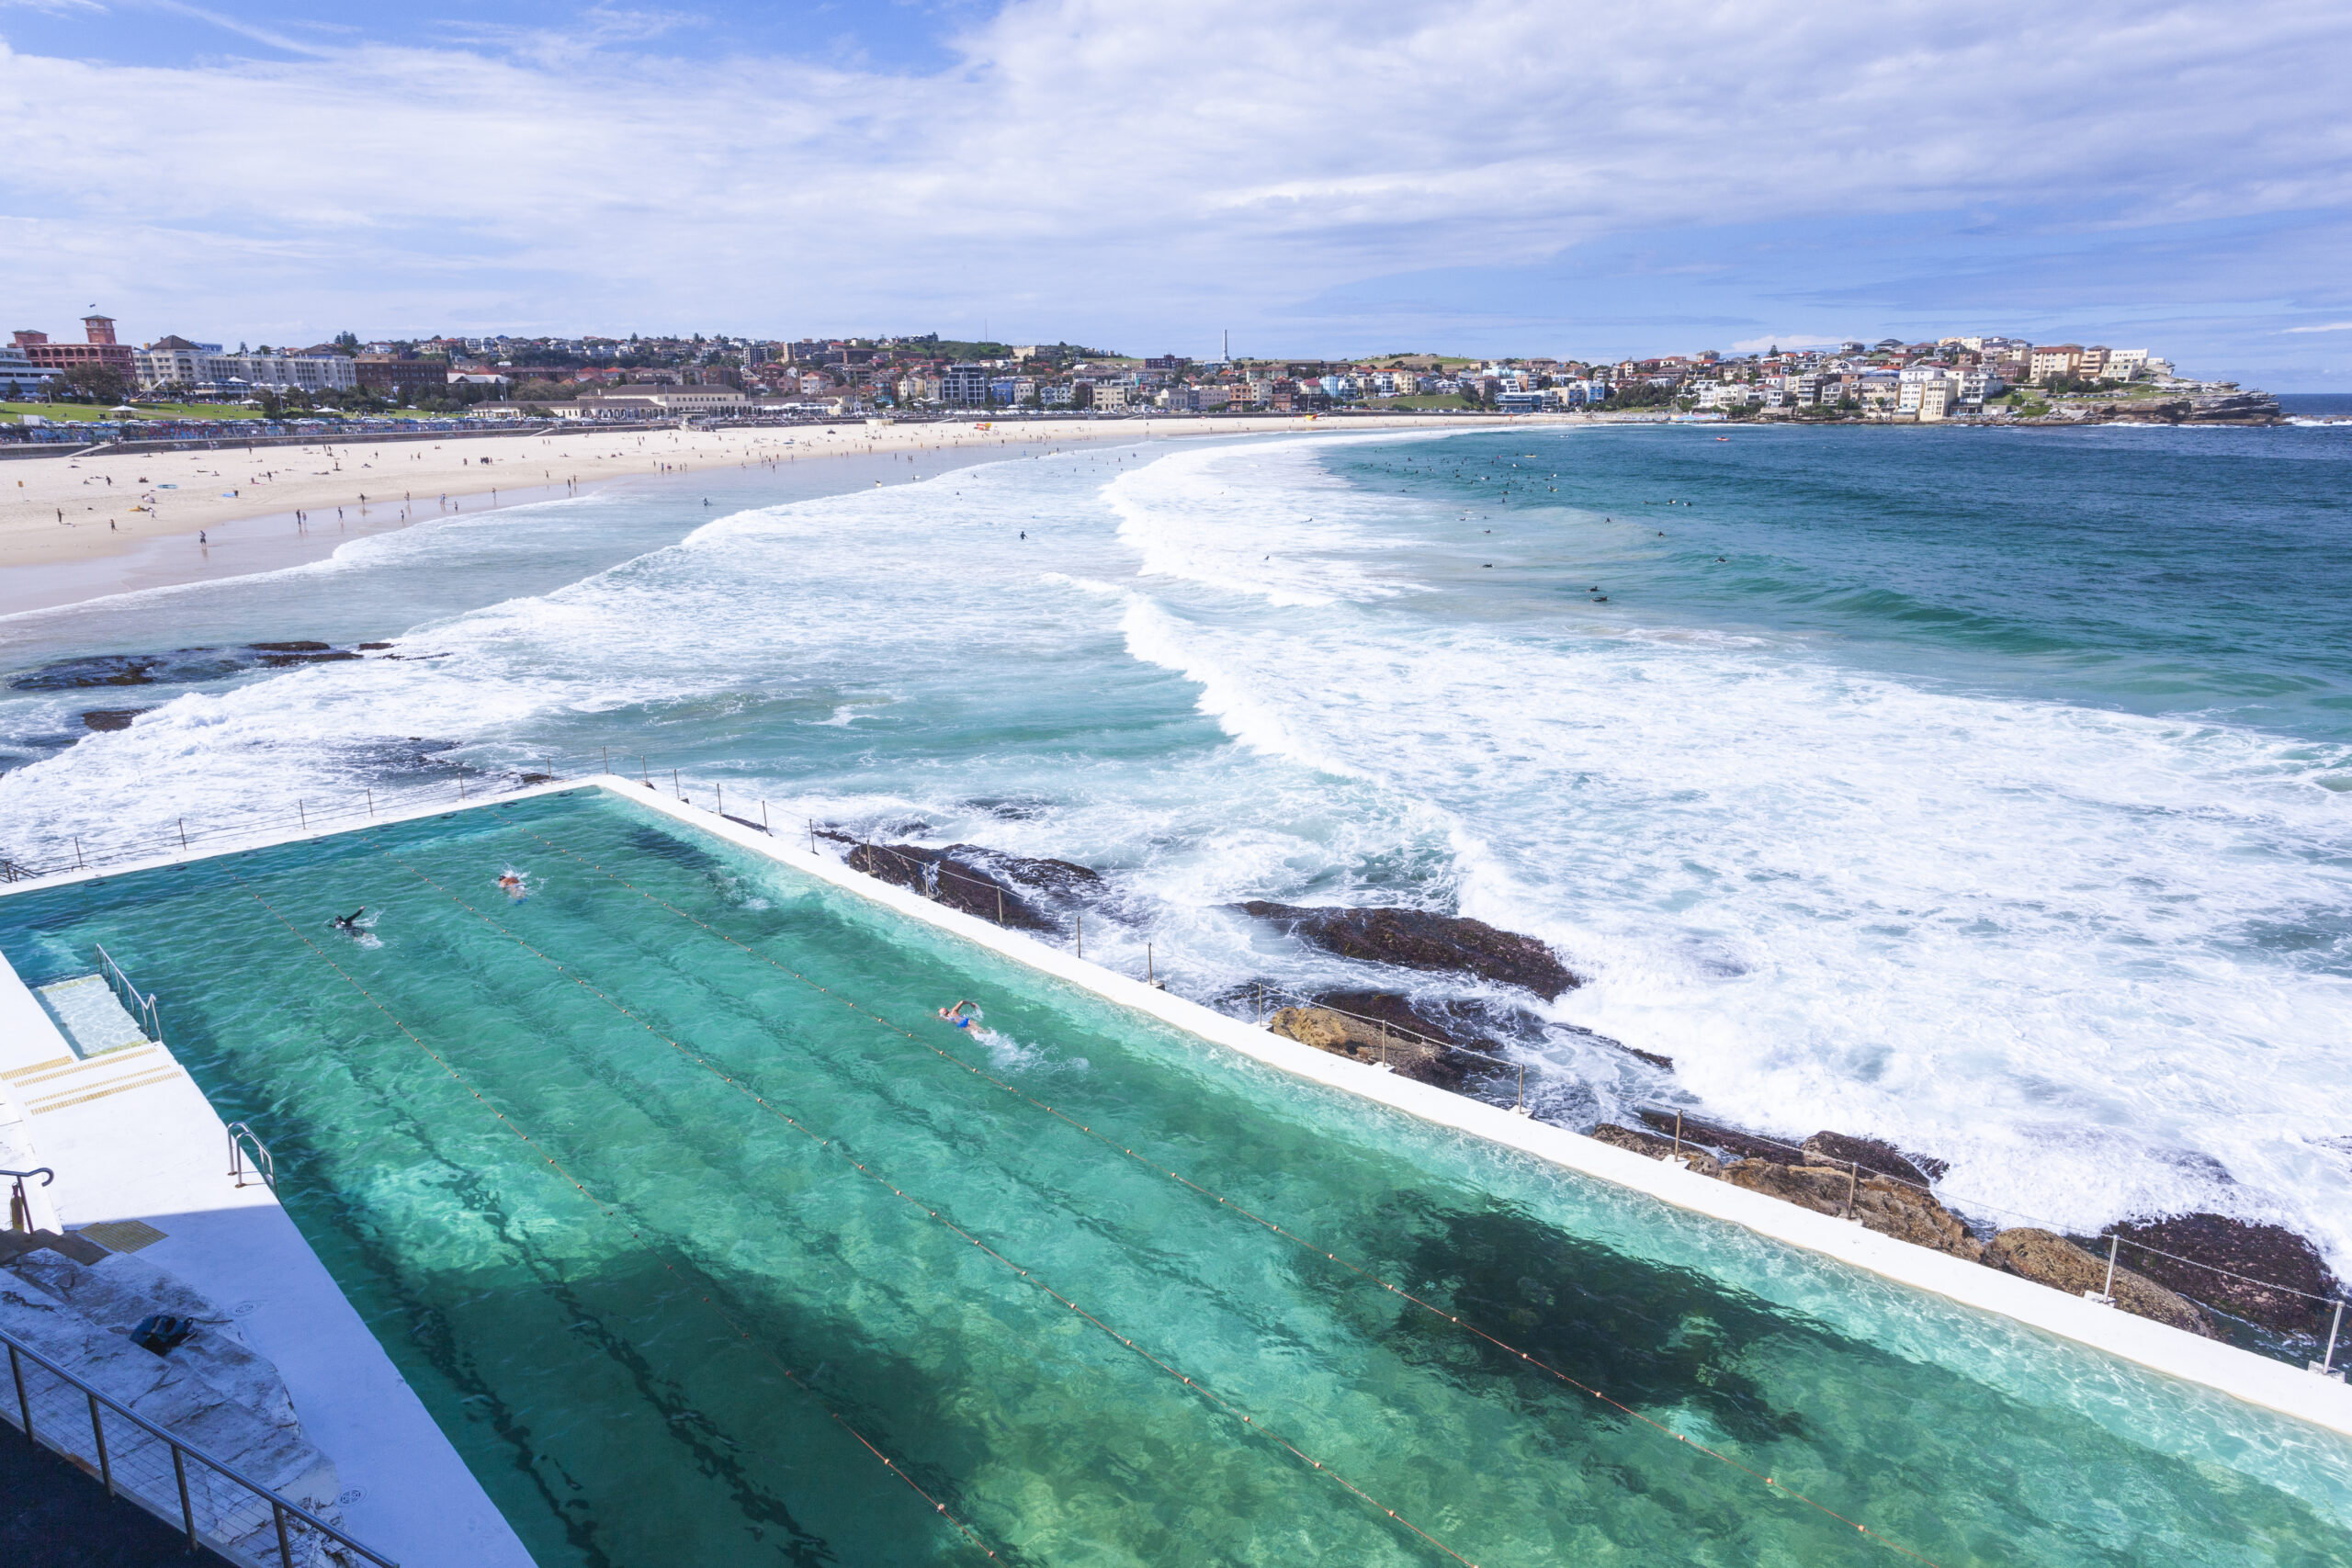 Australia's famous Bondi Icebergs Pool, a stunning oceanside pool located at Bondi Beach in Sydney